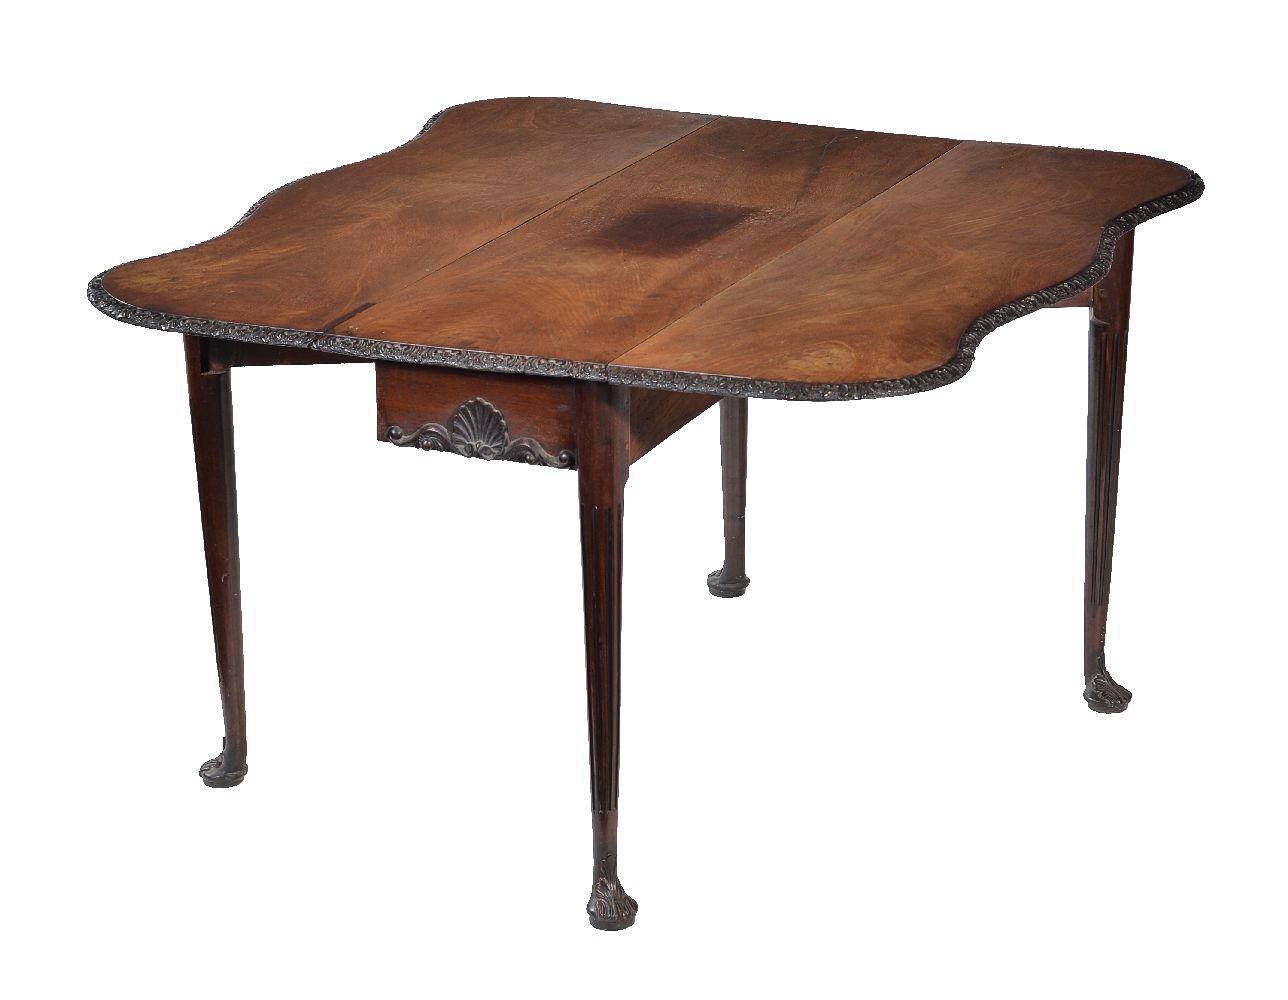 A mahogany drop leaf dining table in George II Irish style